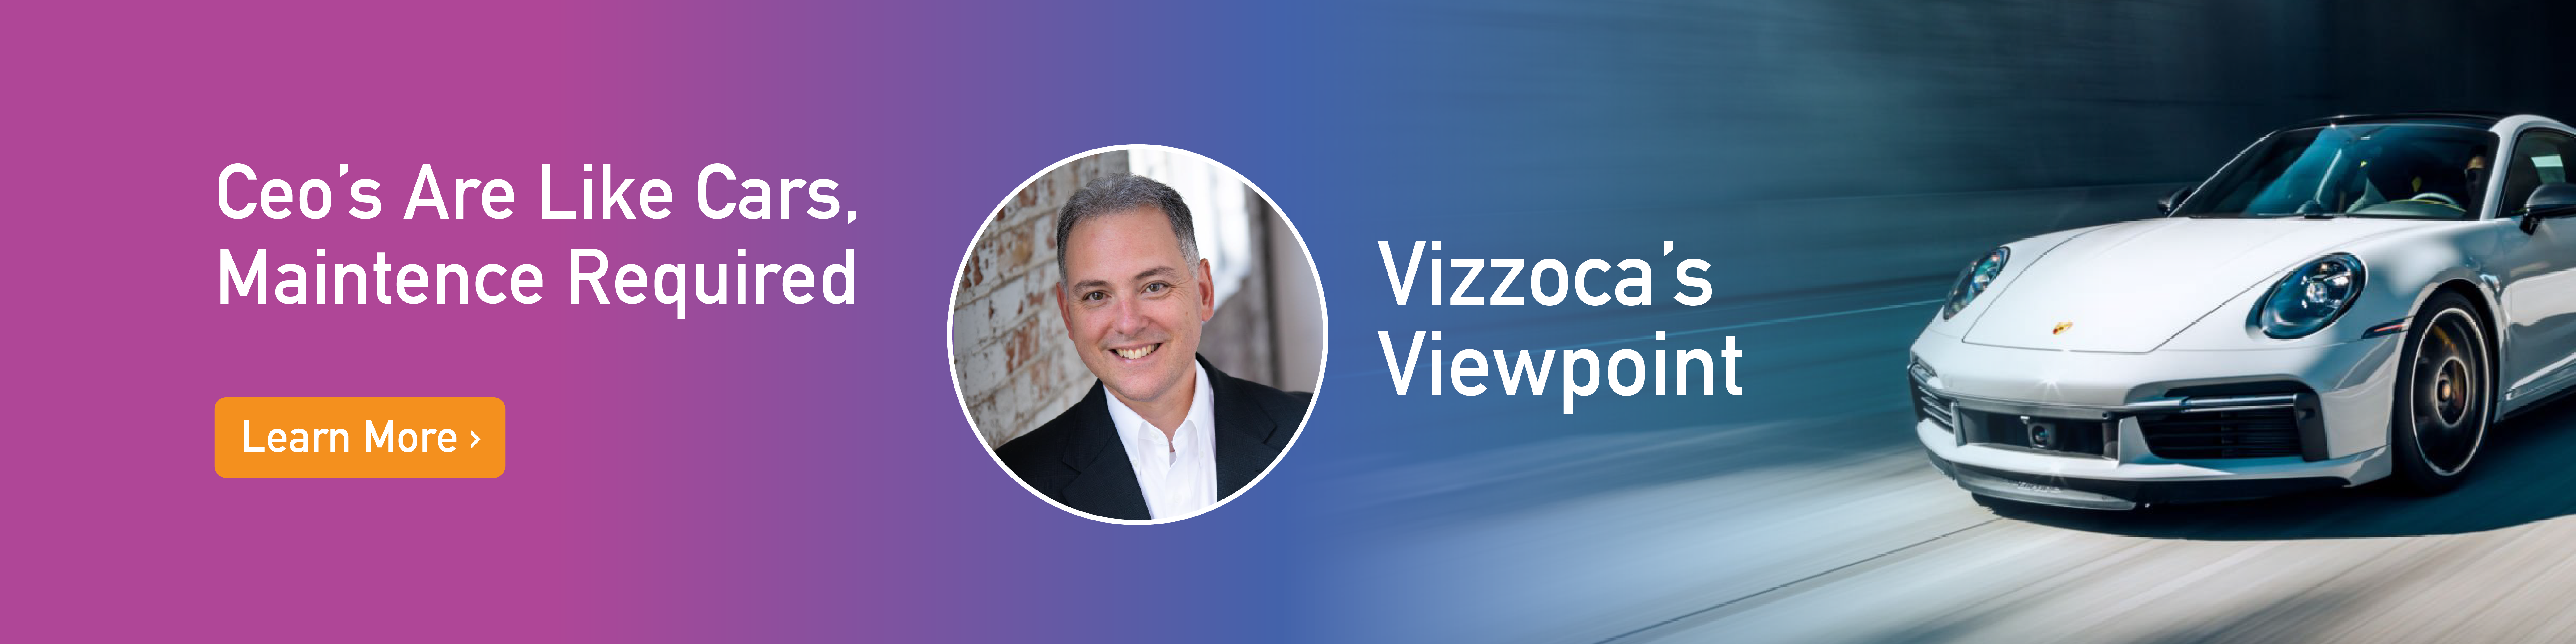 Vizzoca's Viewpoint